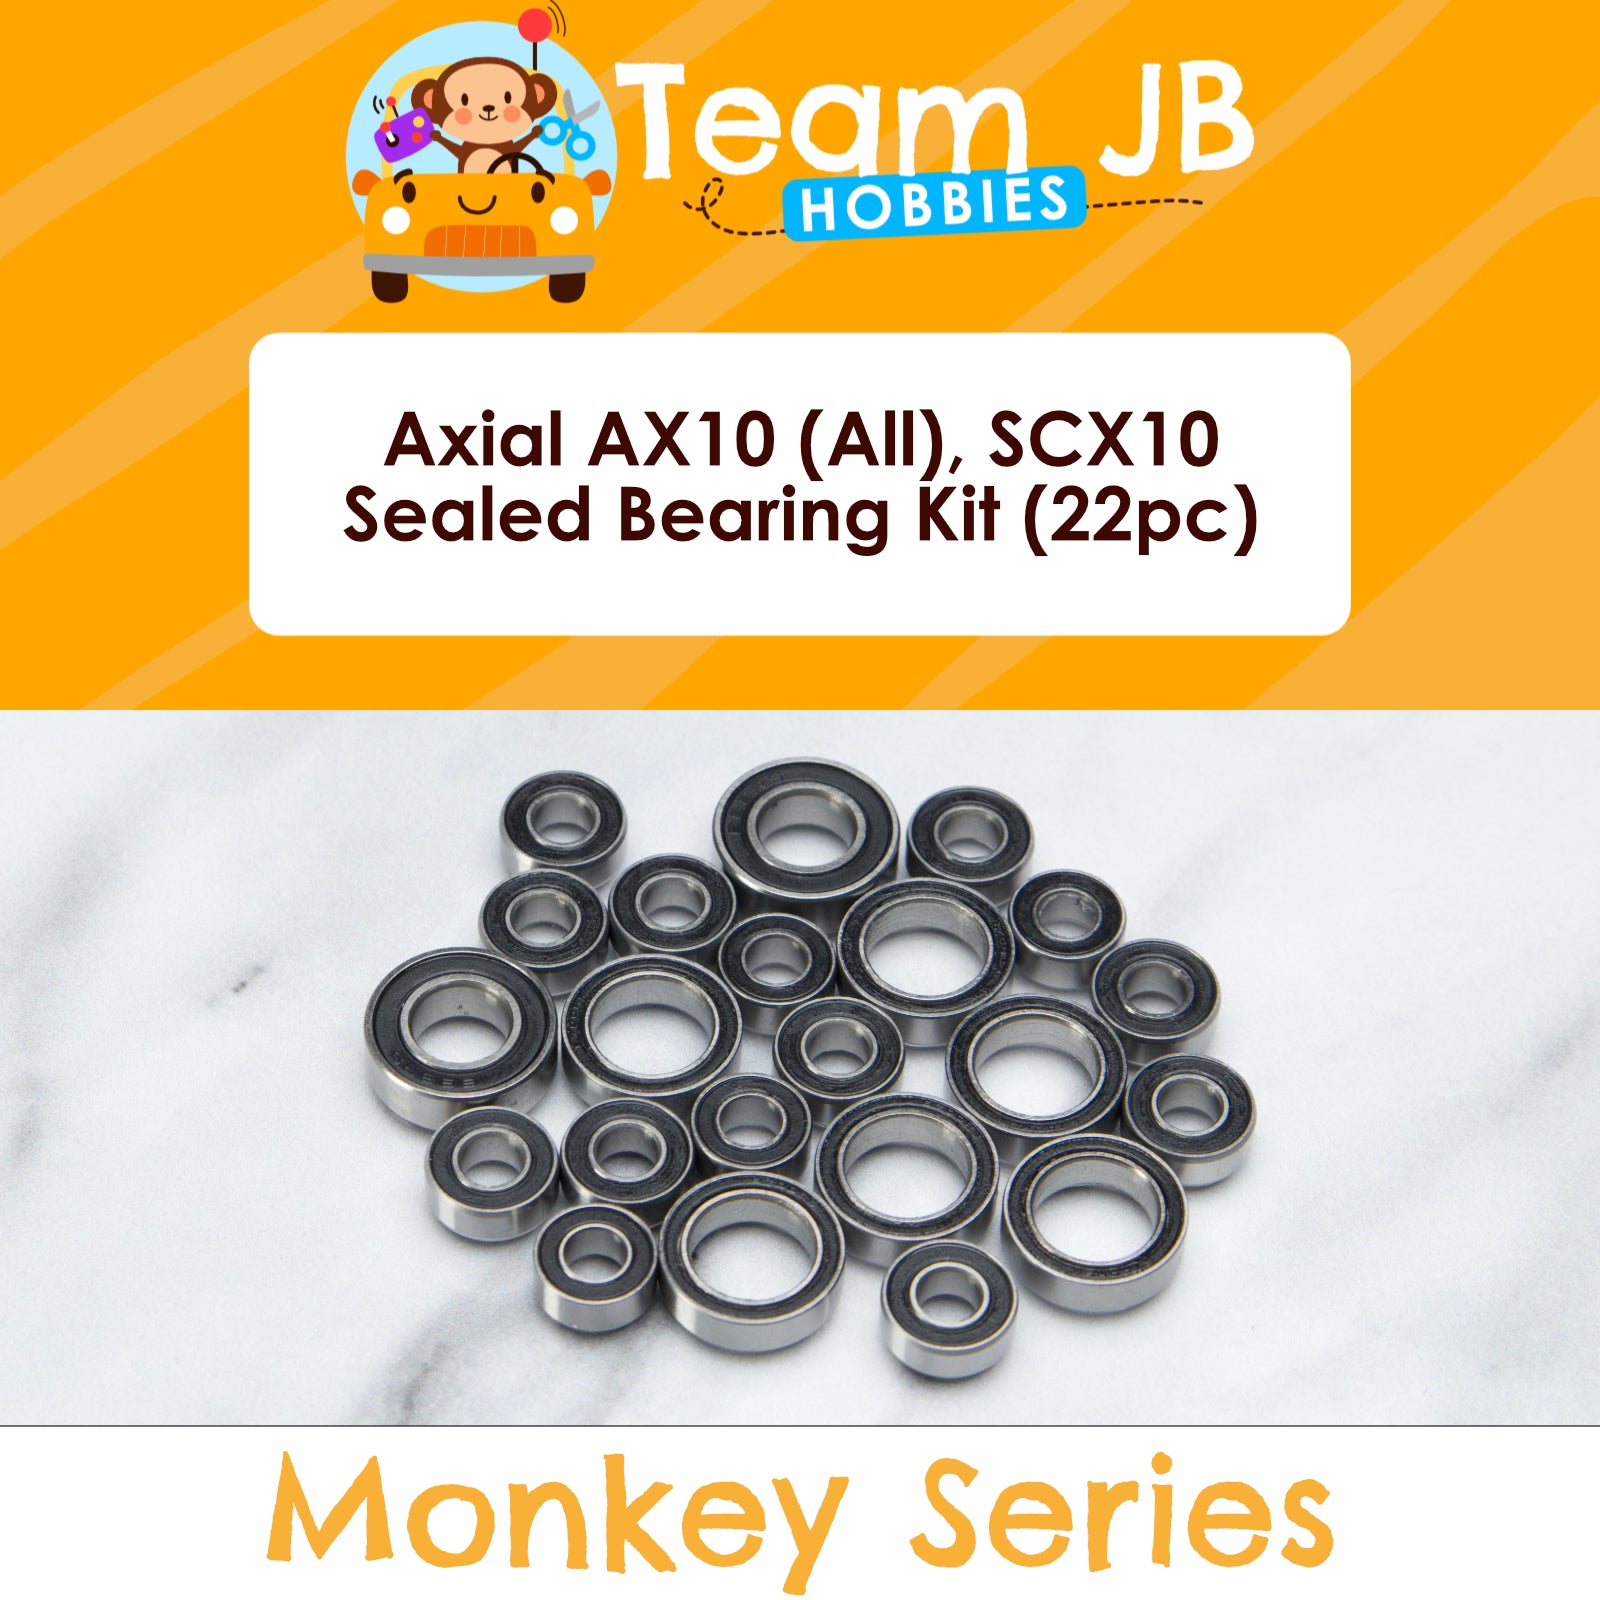 Axial AX10 (All), SCX10 - Sealed Bearing Kit